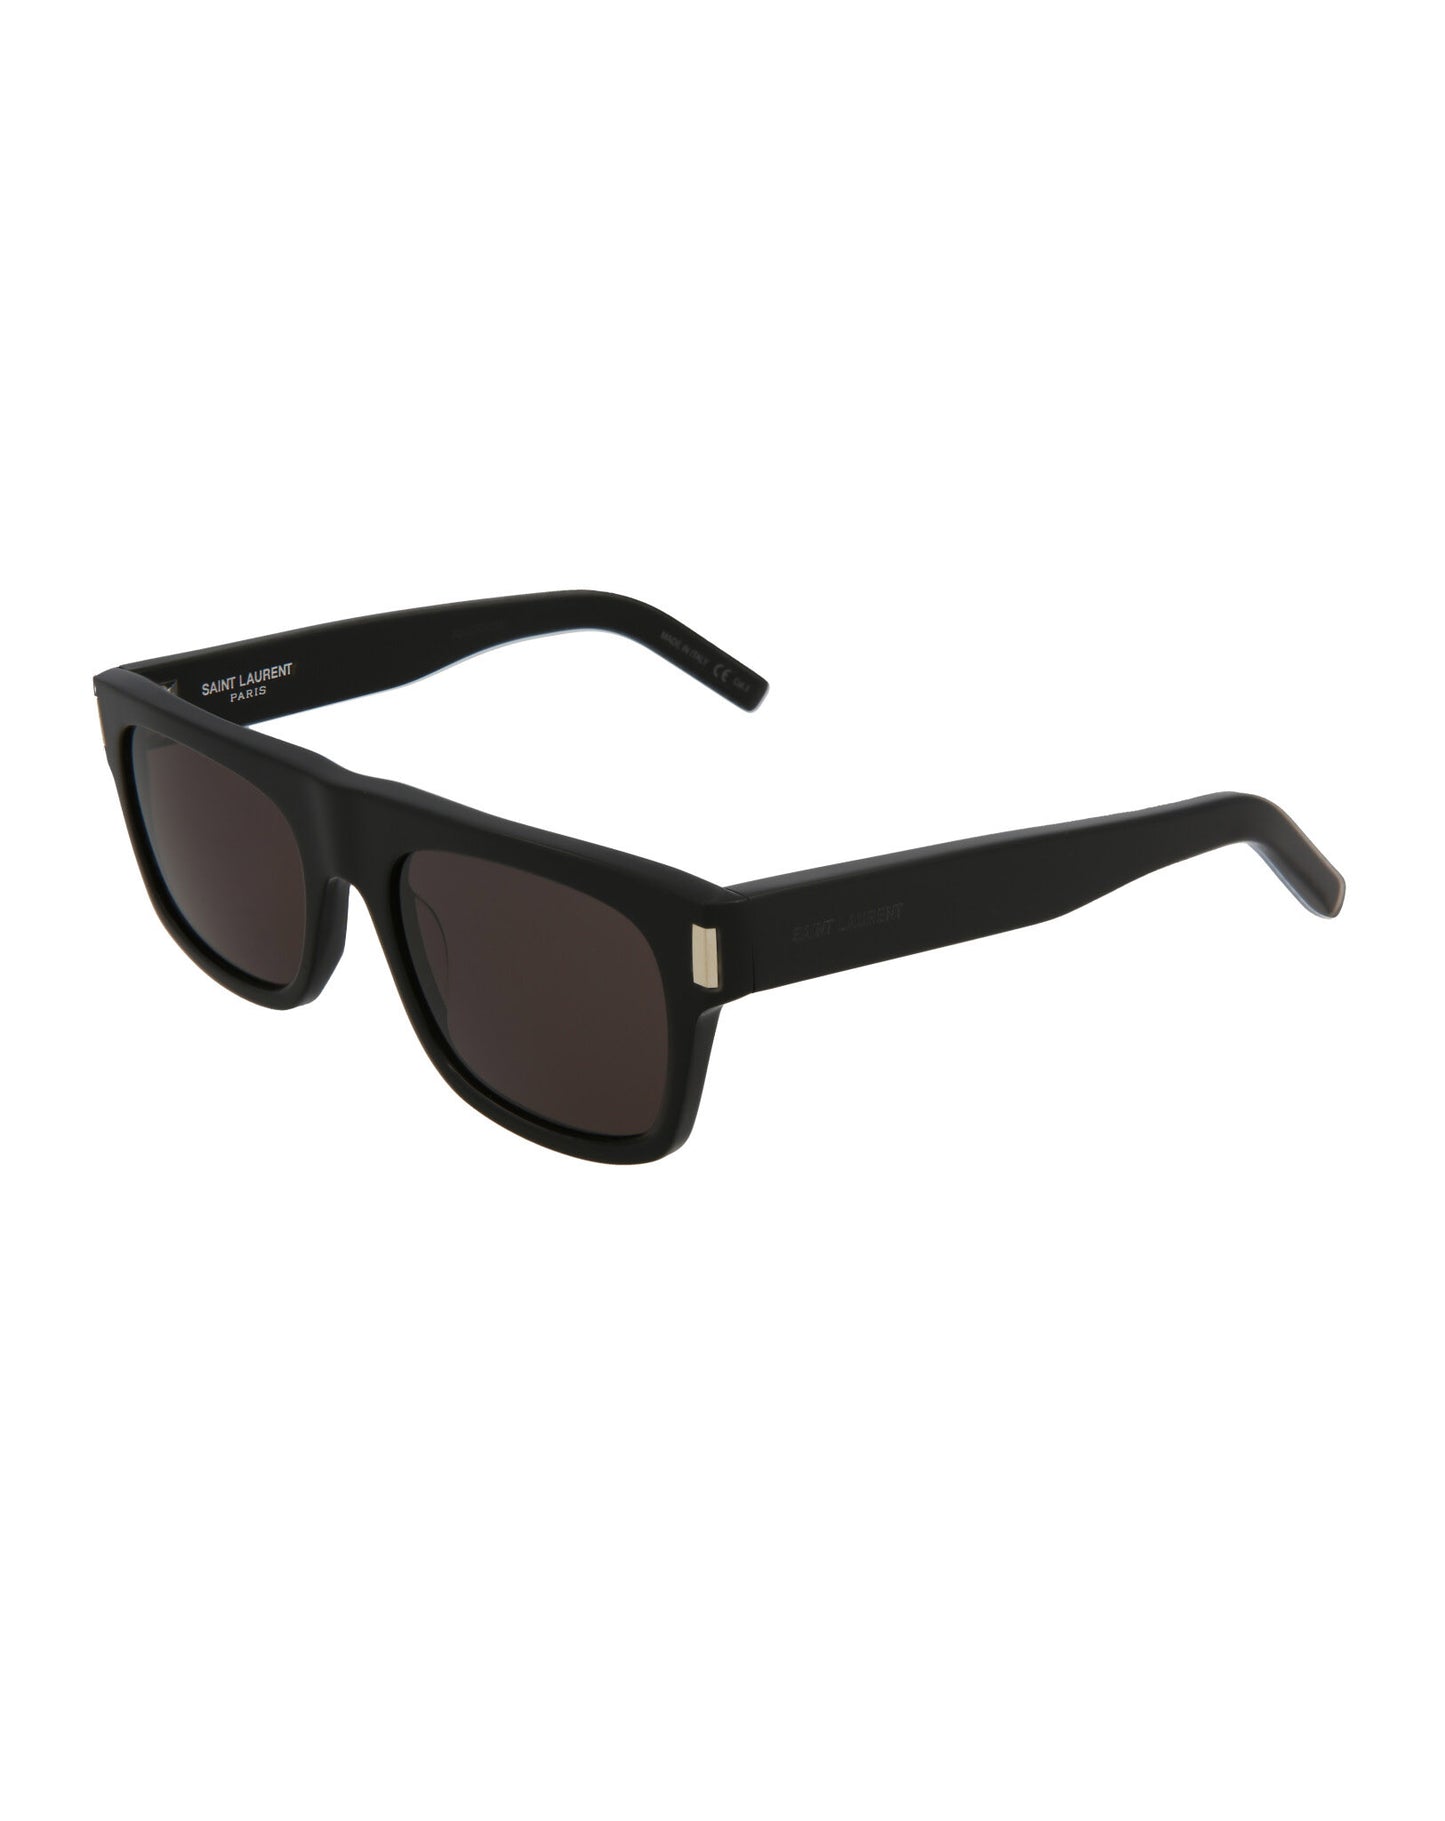 Saint Laurent Fashion Sunglasses Black Black Grey